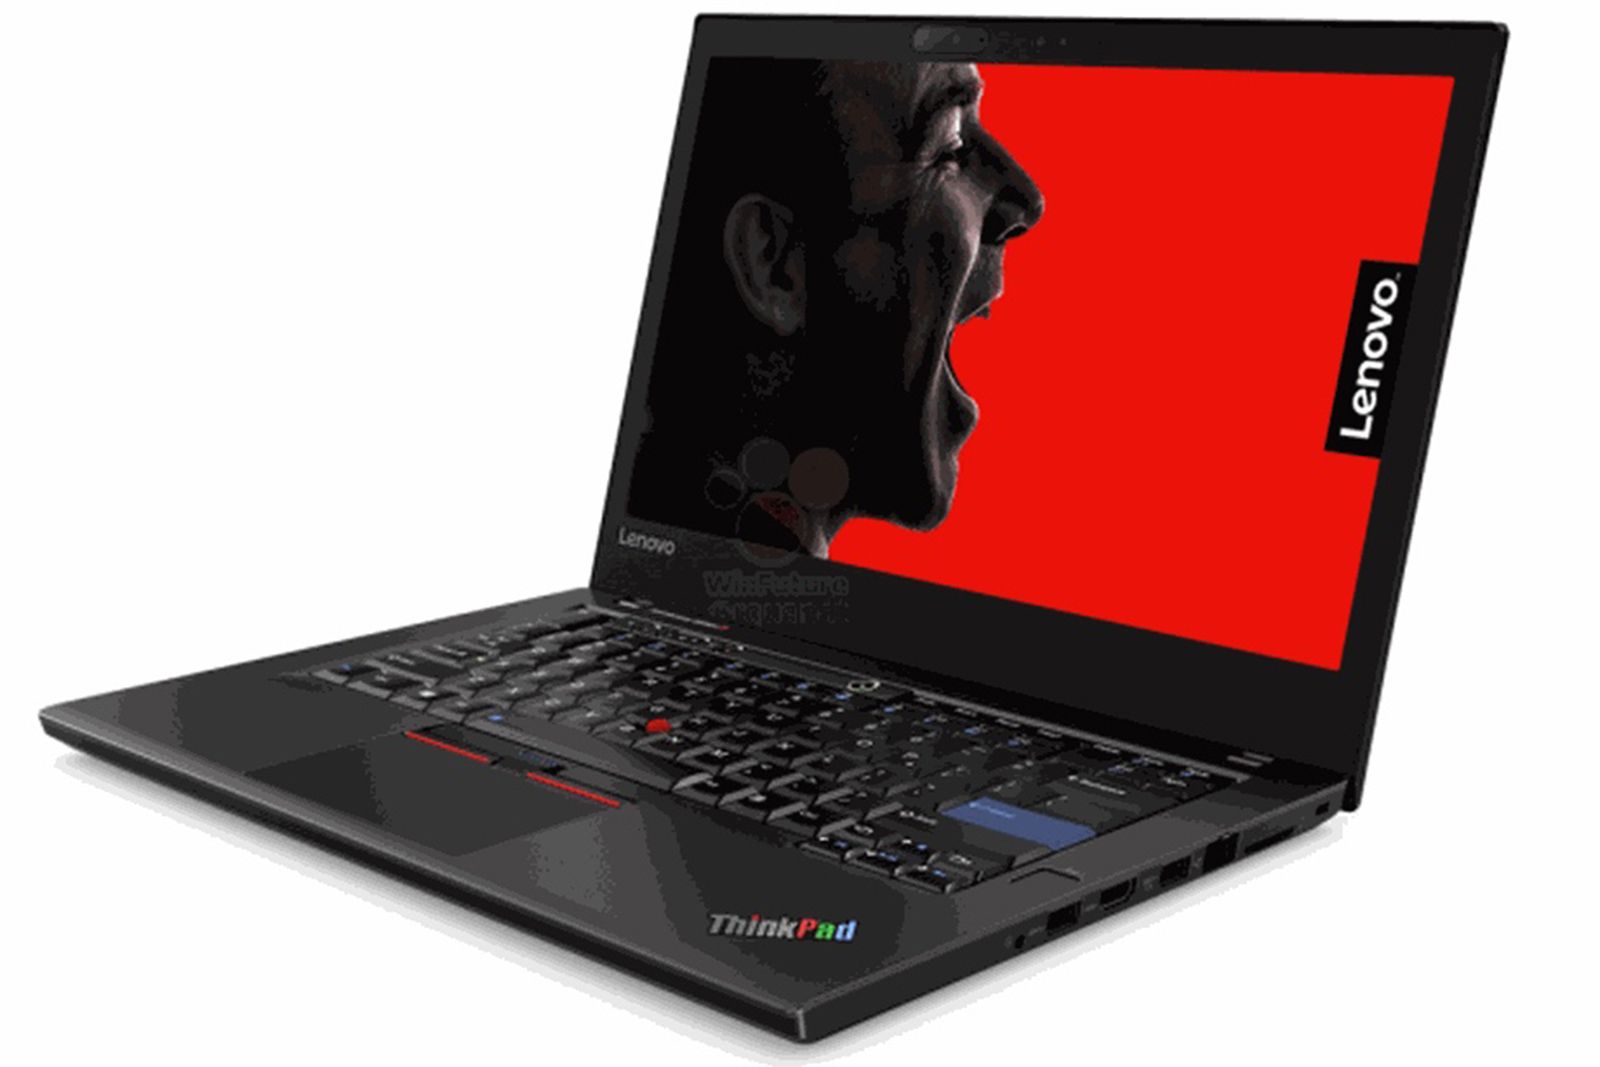 Lenovo resurrects iconic ThinkPad design for 25th Anniversary image 1